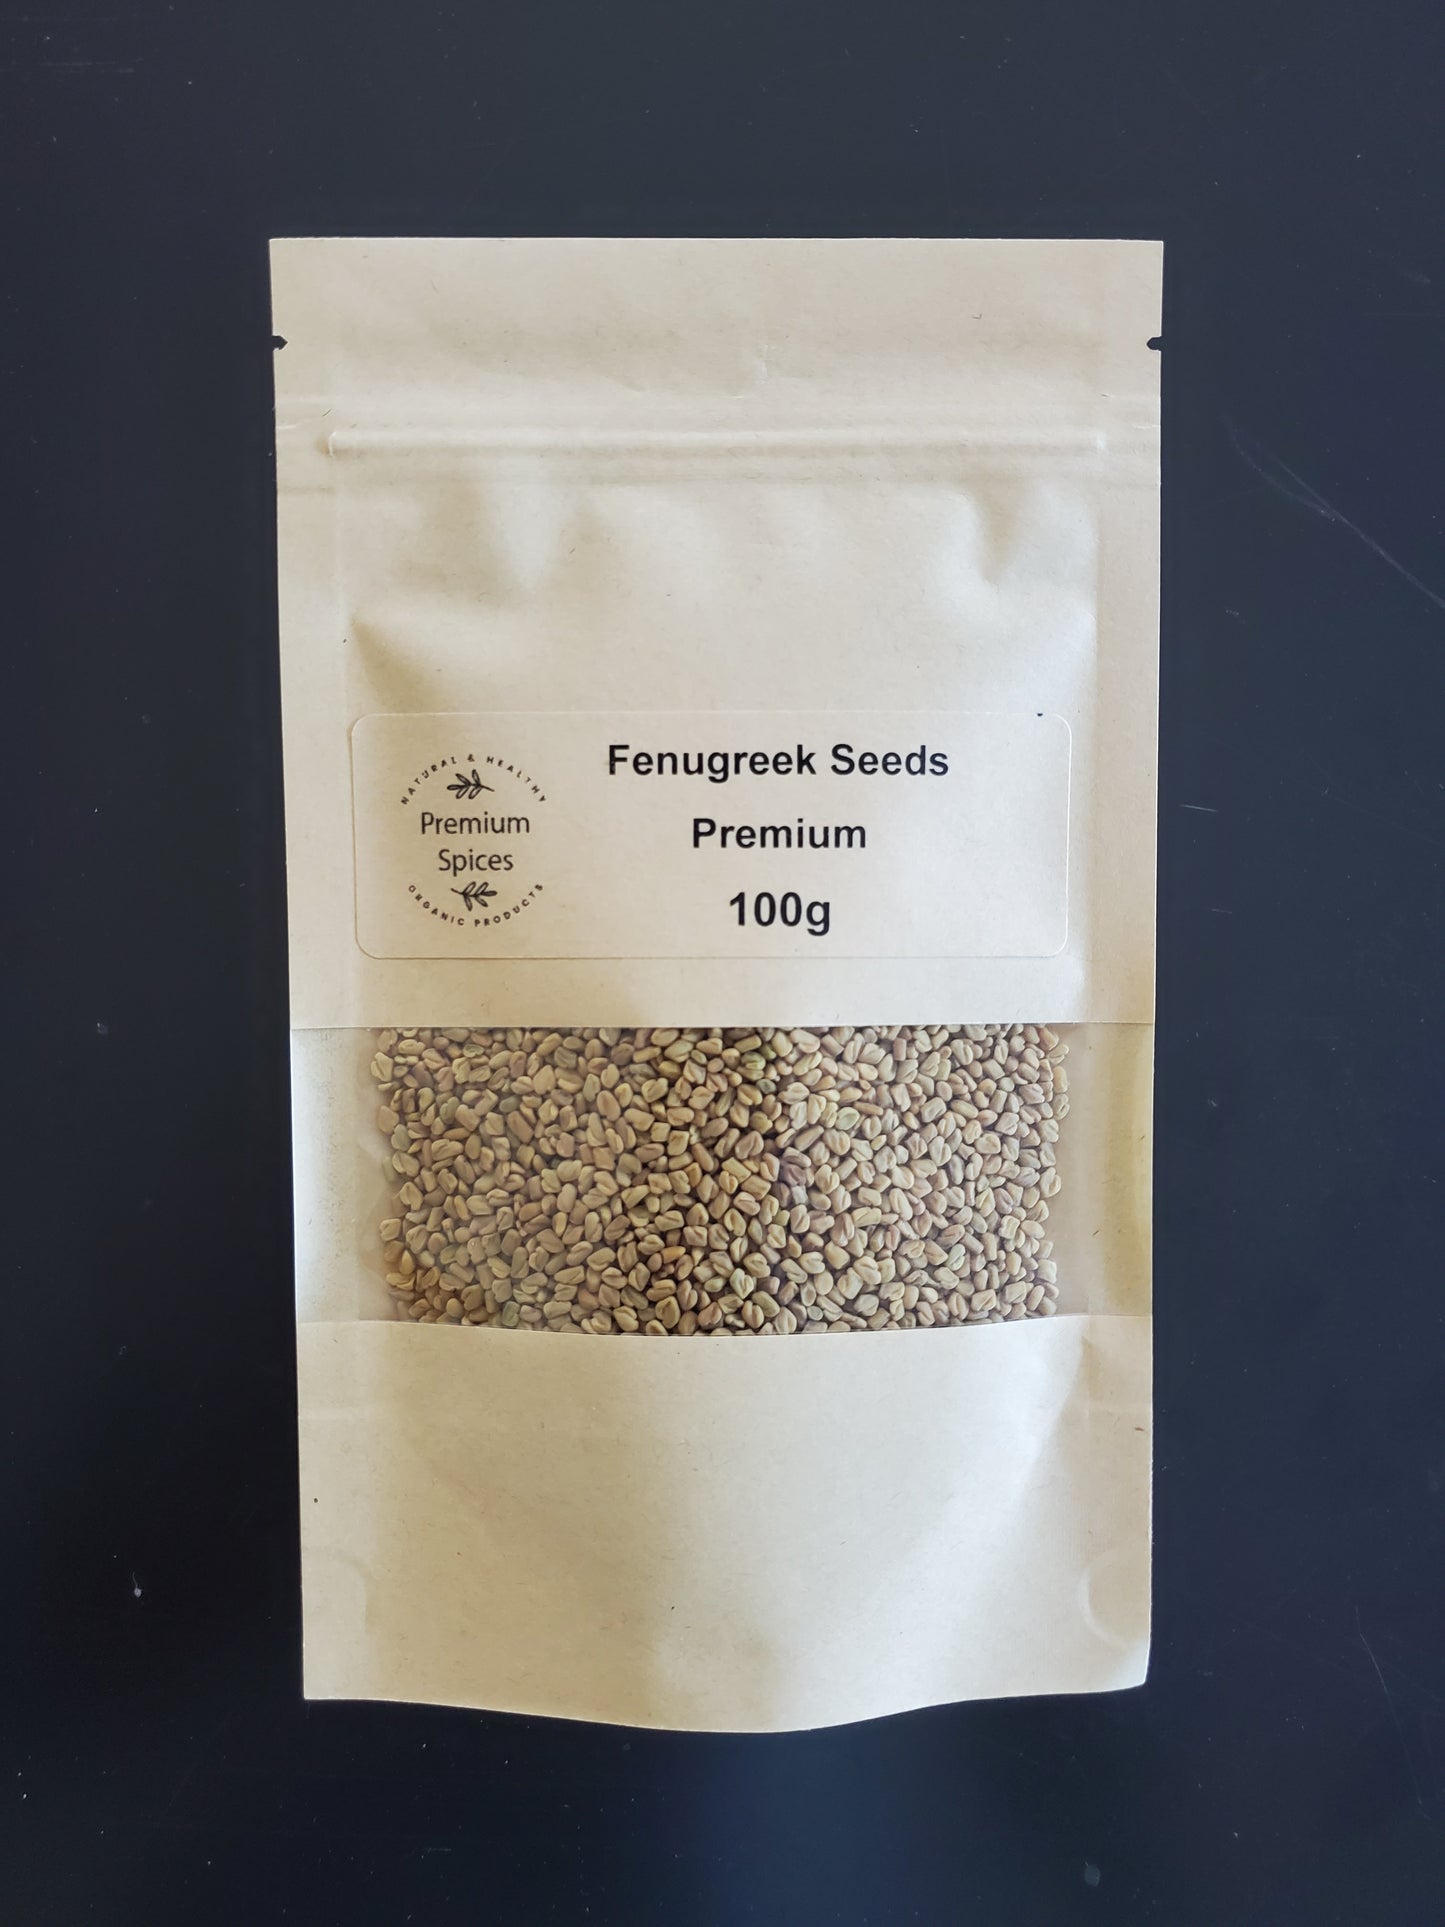 Fenugreek Seeds NZ | Fresh Fenugreek | Indian Spices, shows a 100g pack